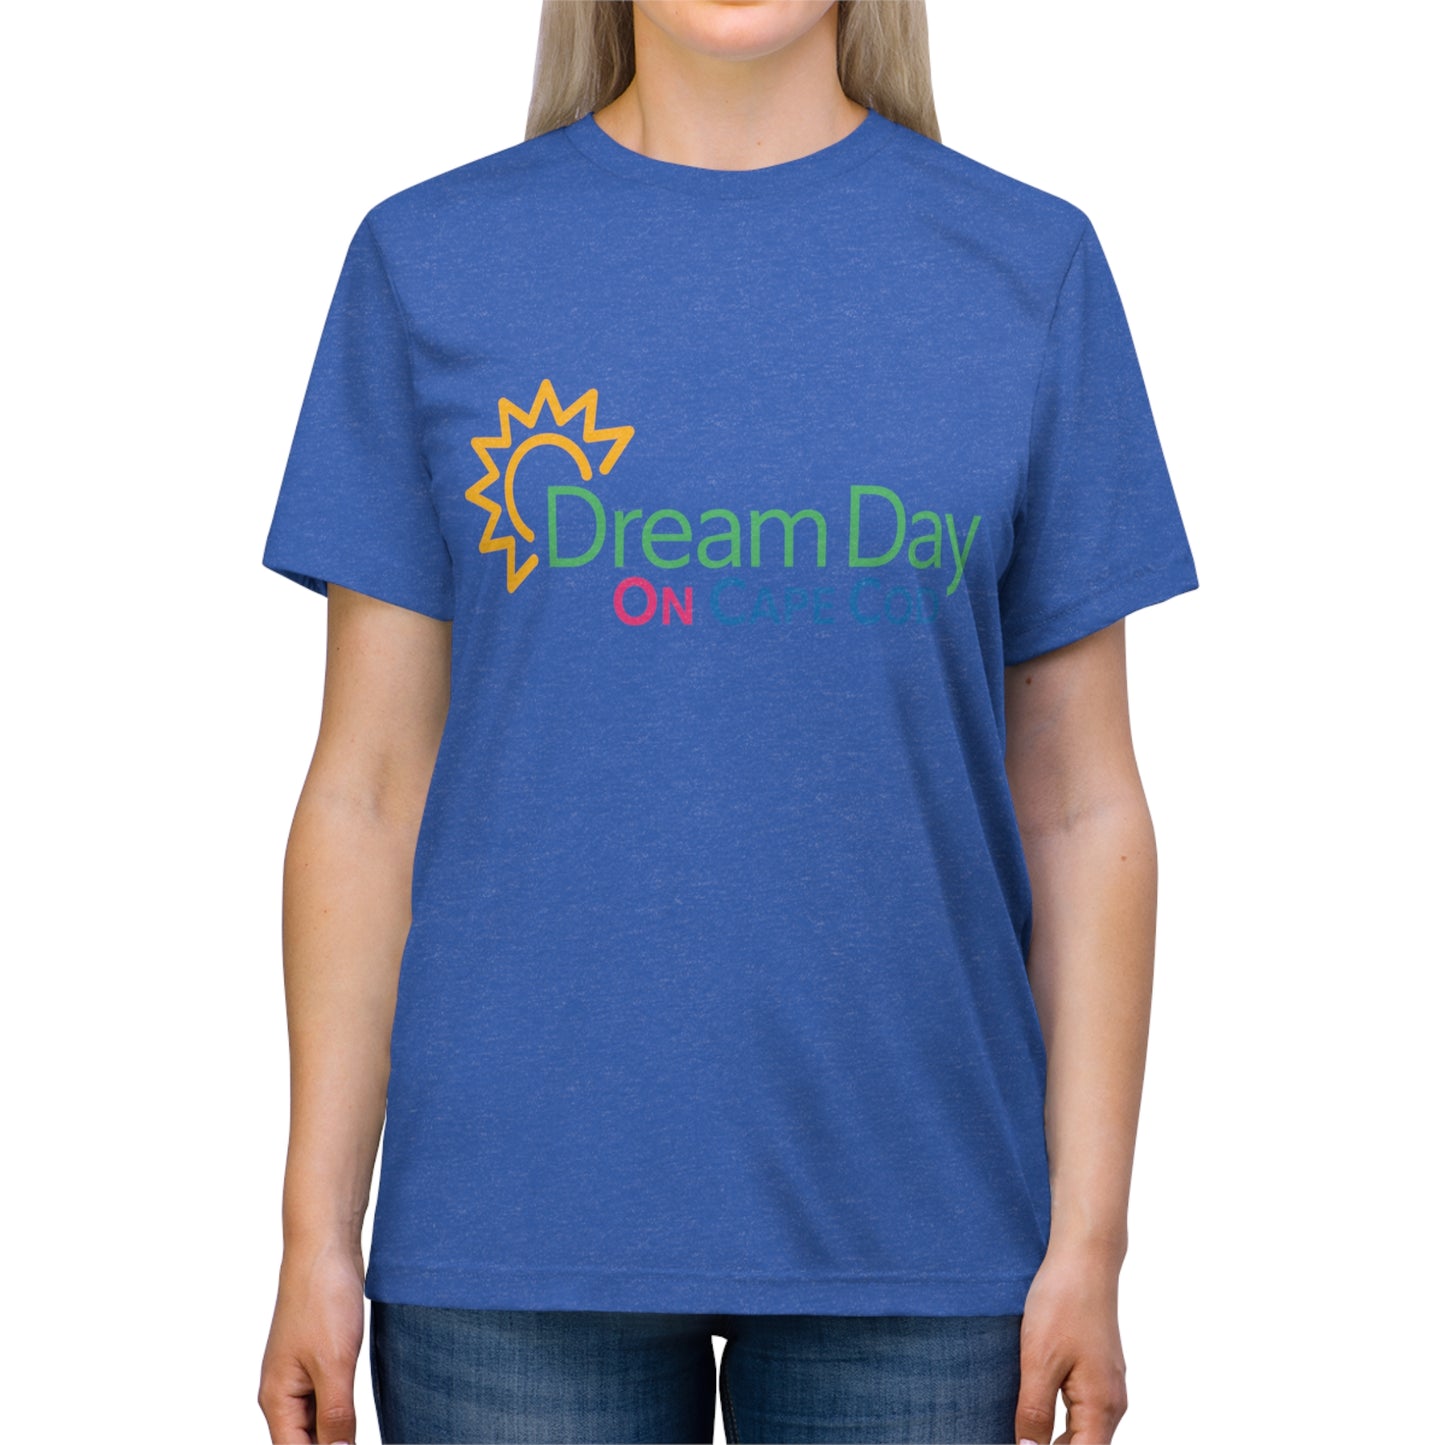 Dream Day on Cape Cod Tri-Blend T-Shirt